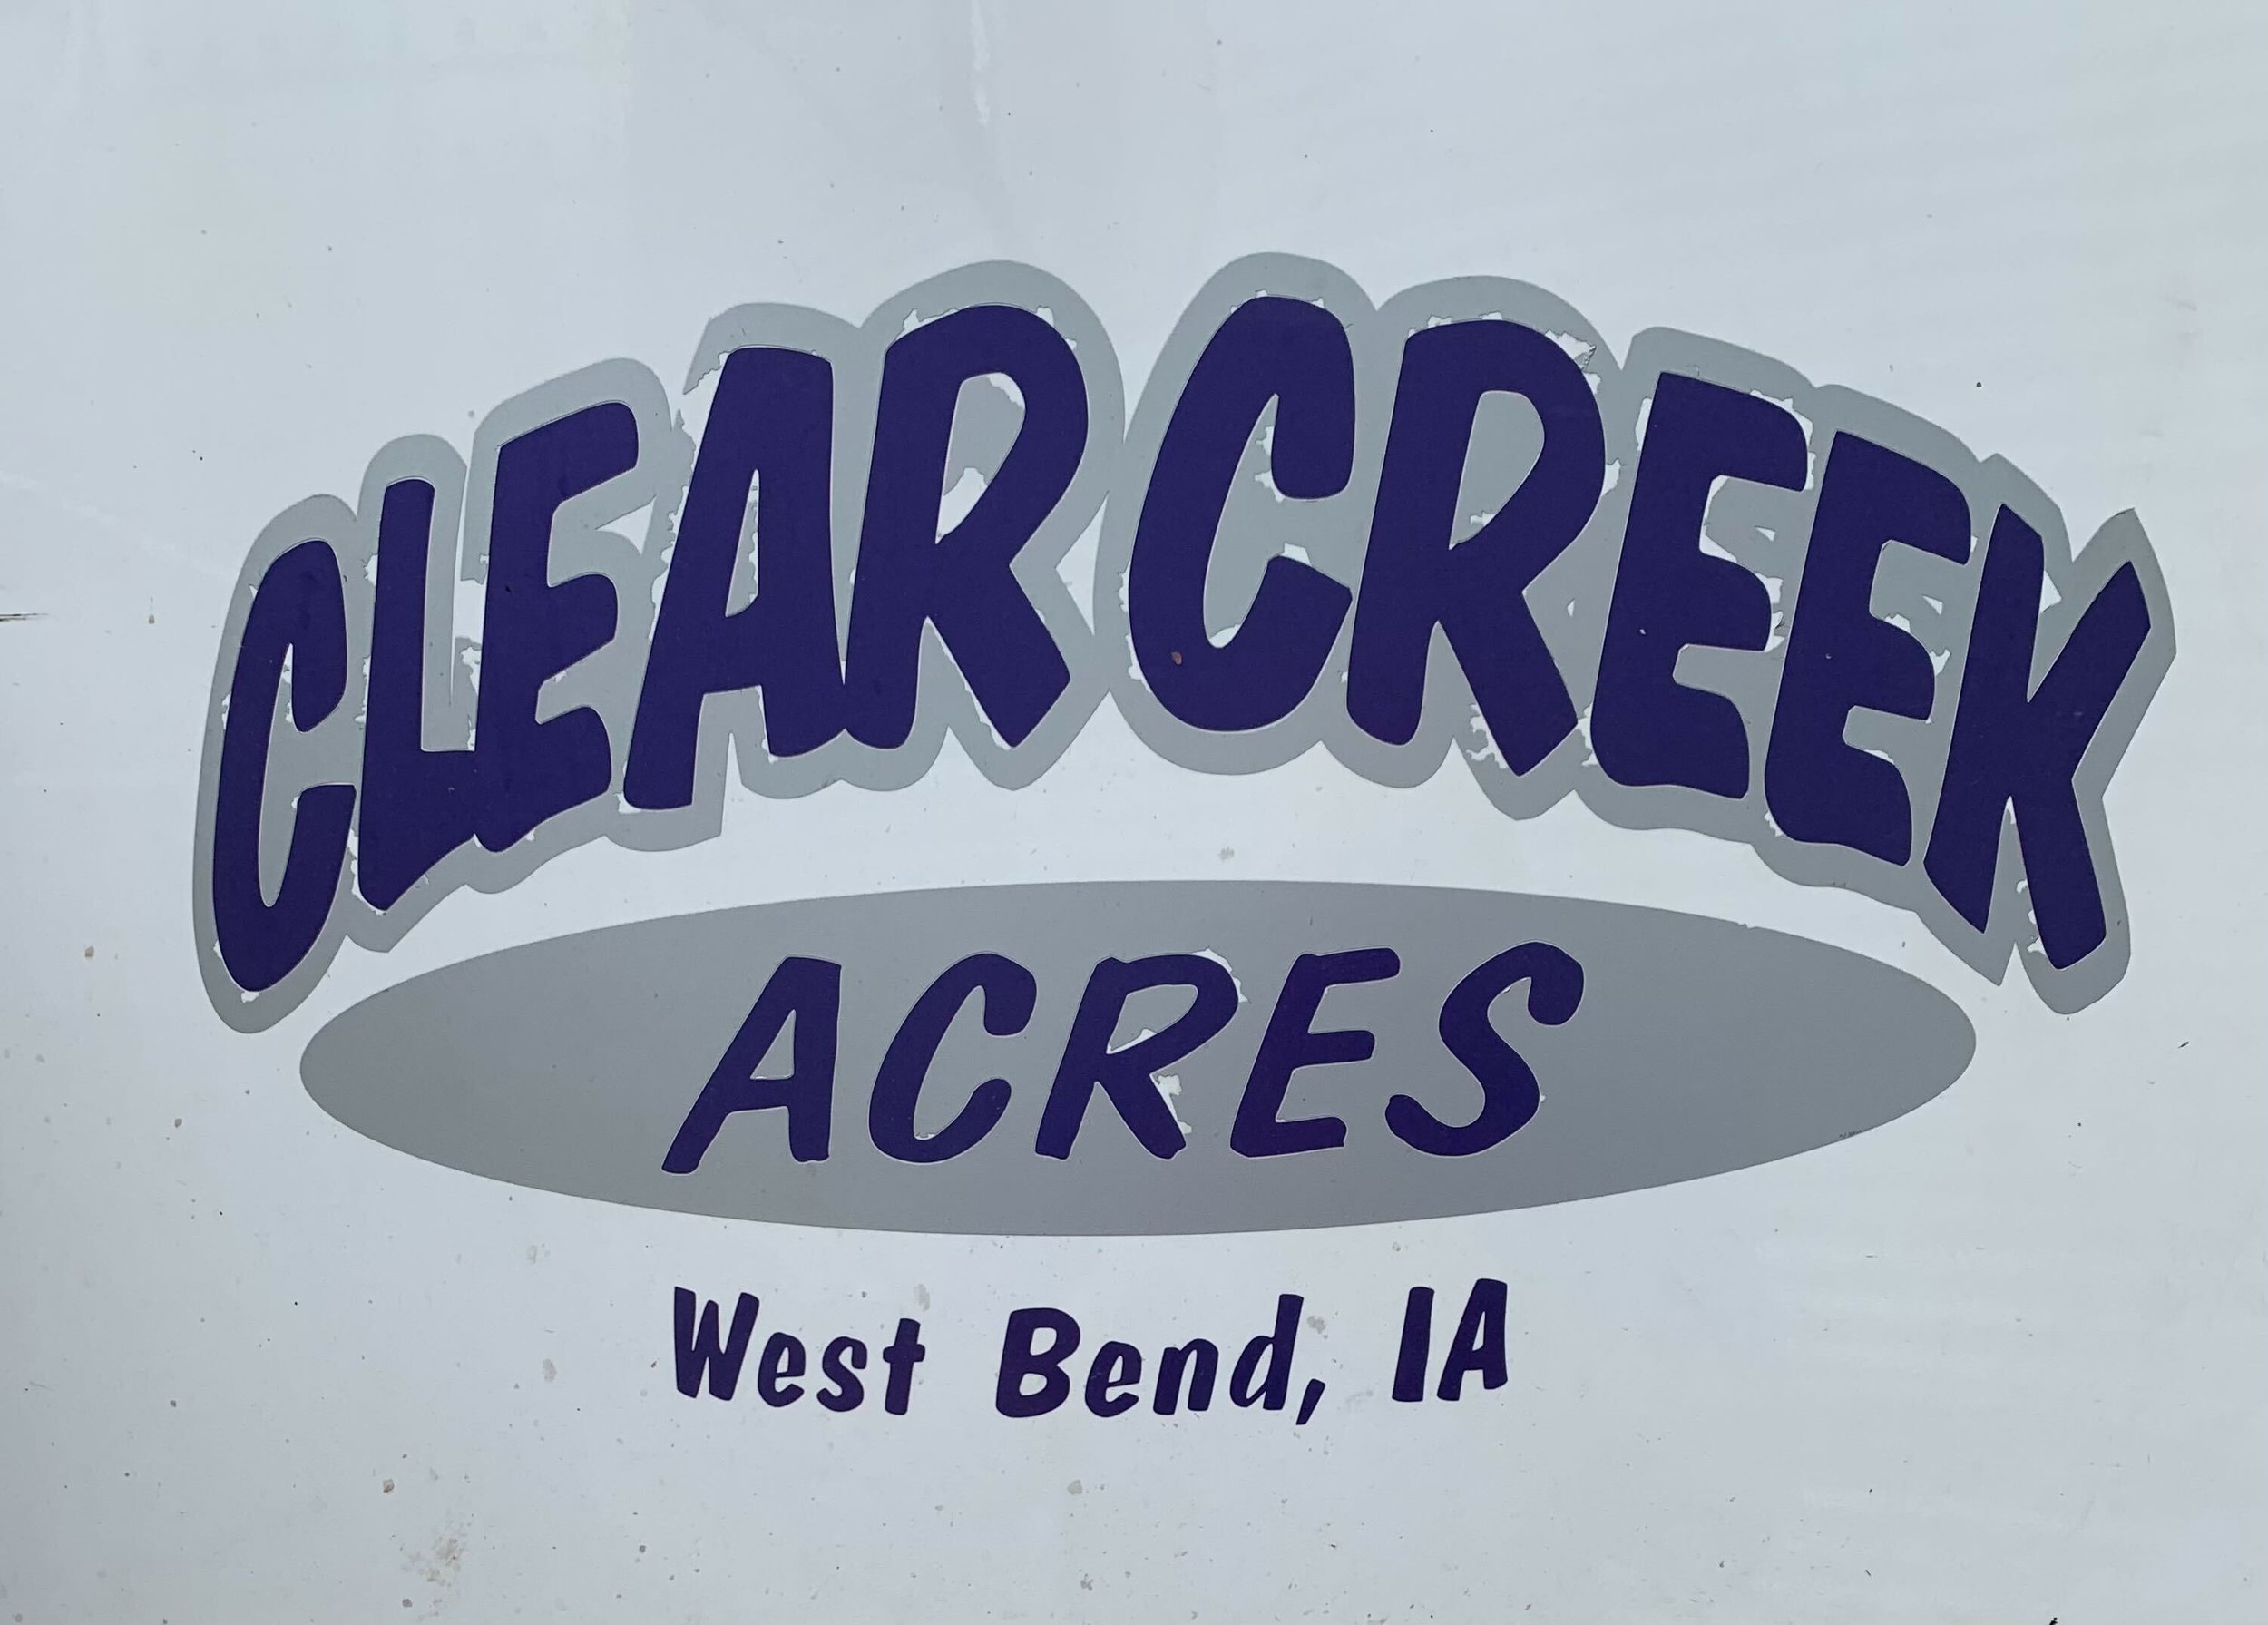 Clear Creek Acres